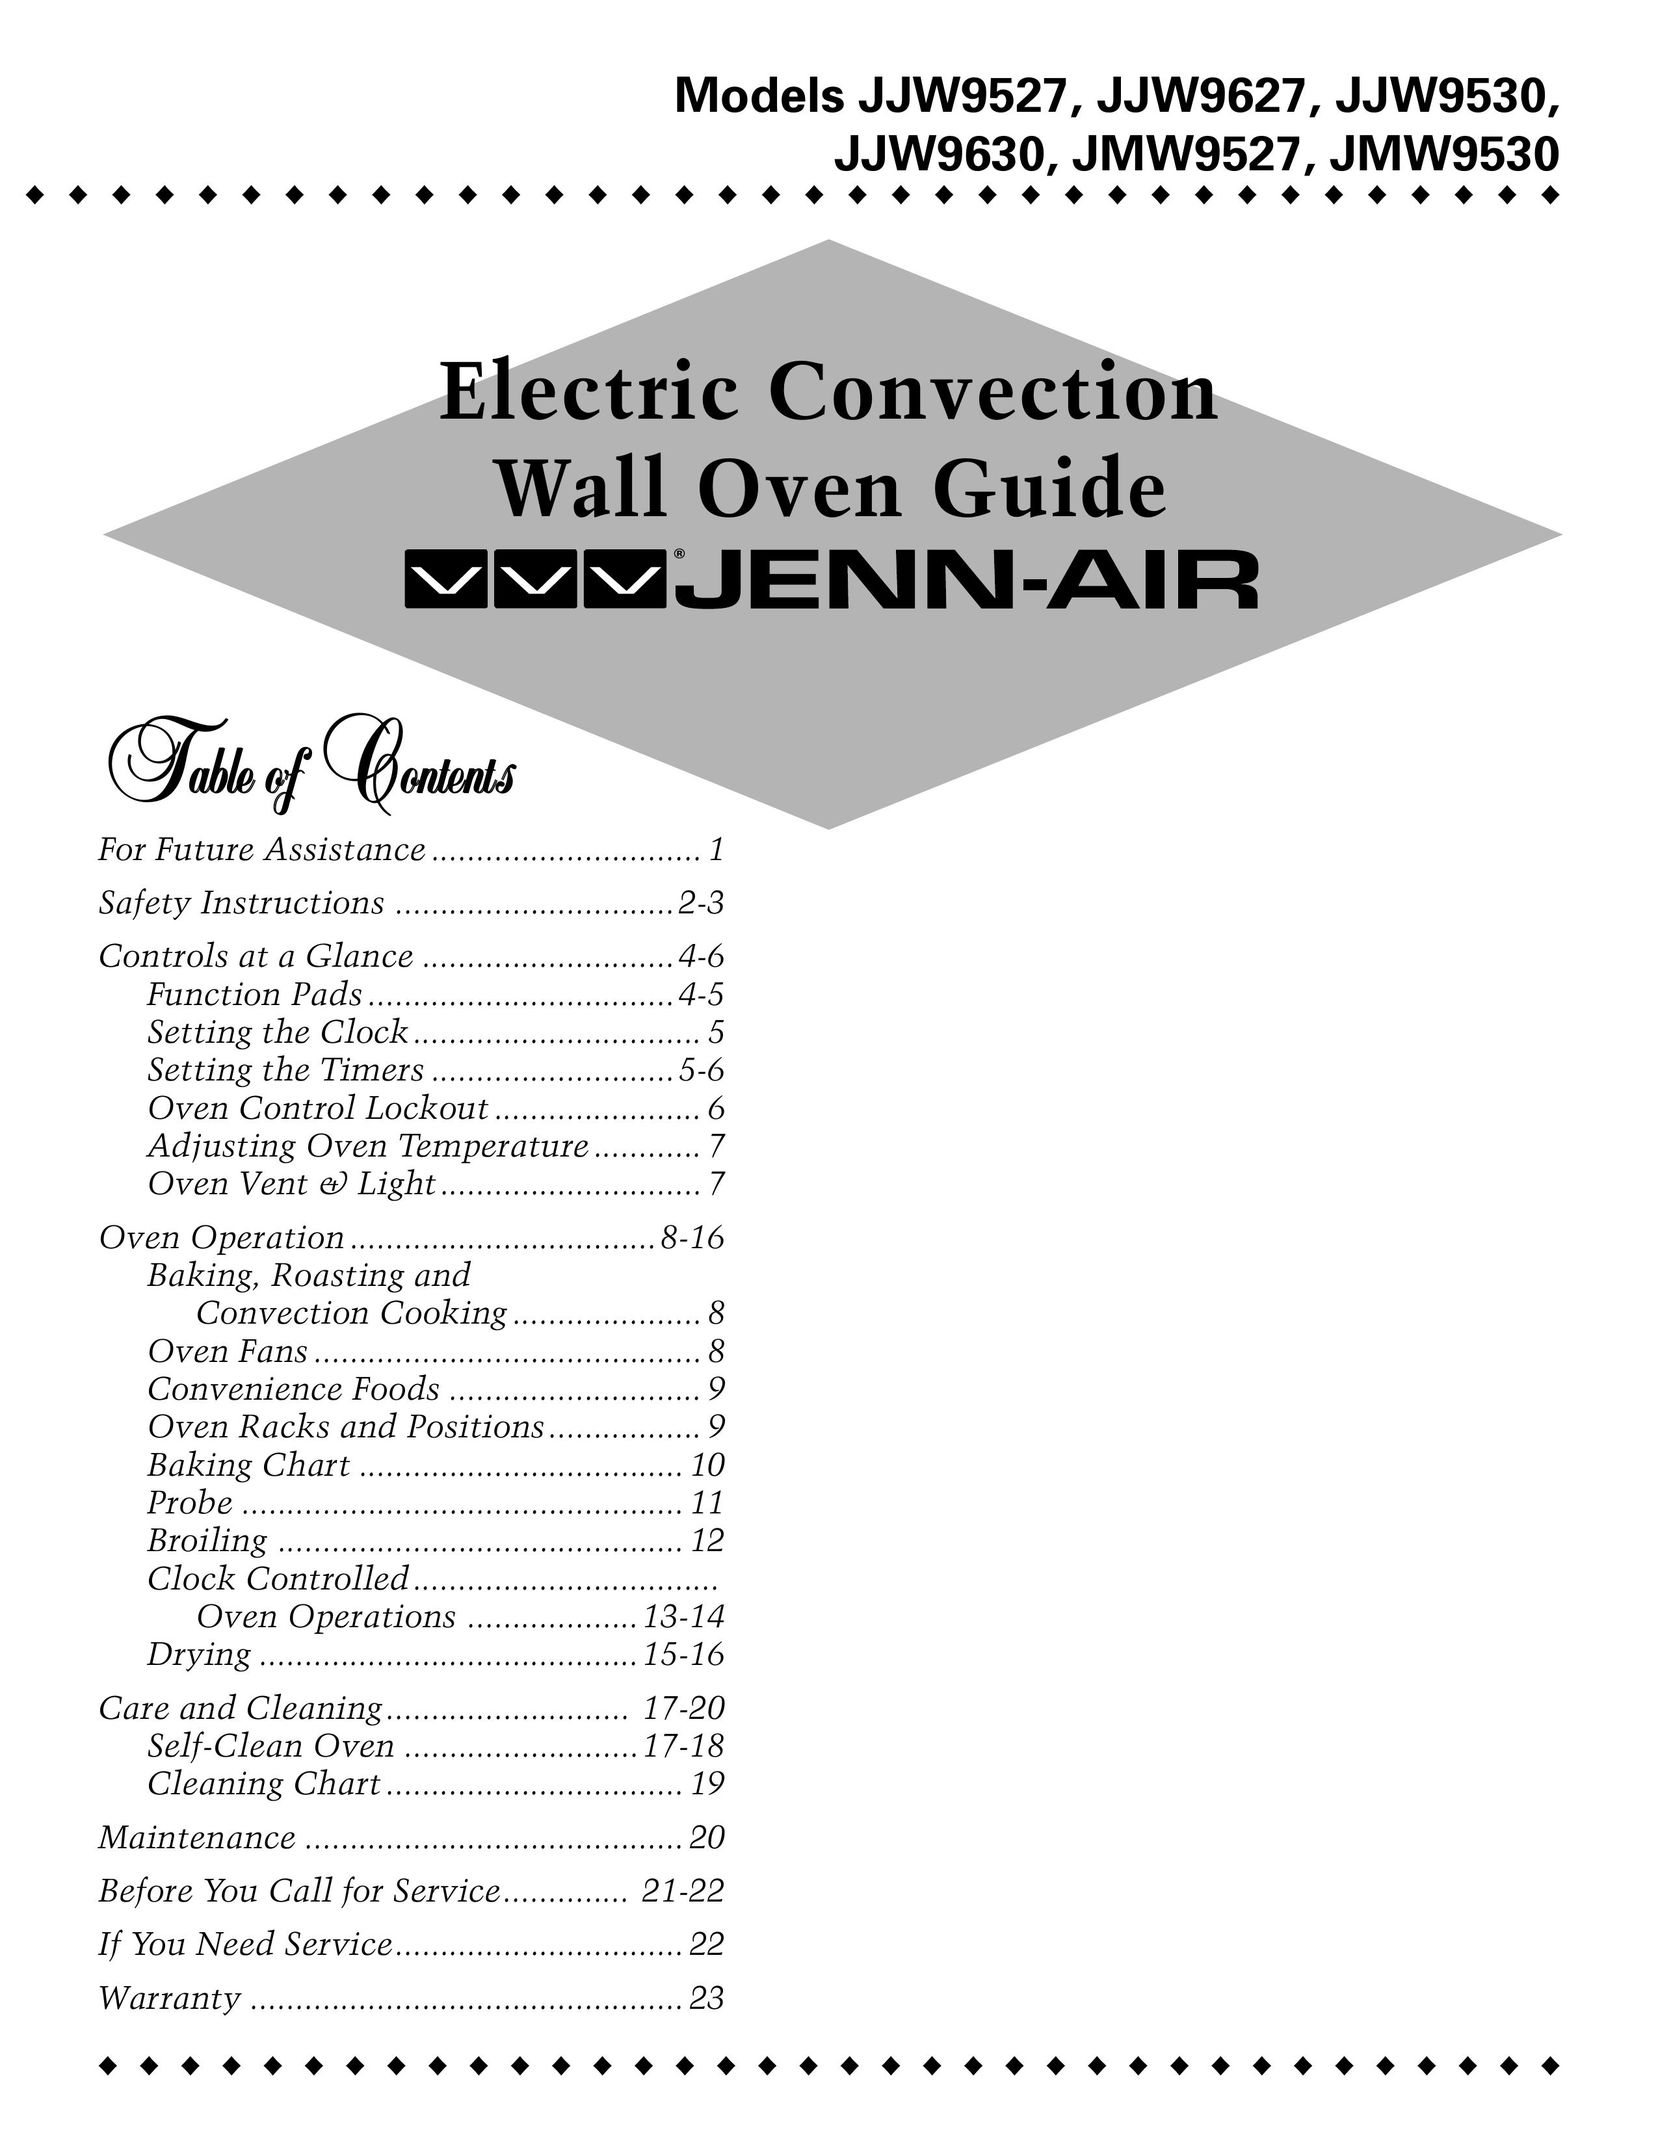 Jenn-Air JJW9627 Convection Oven User Manual